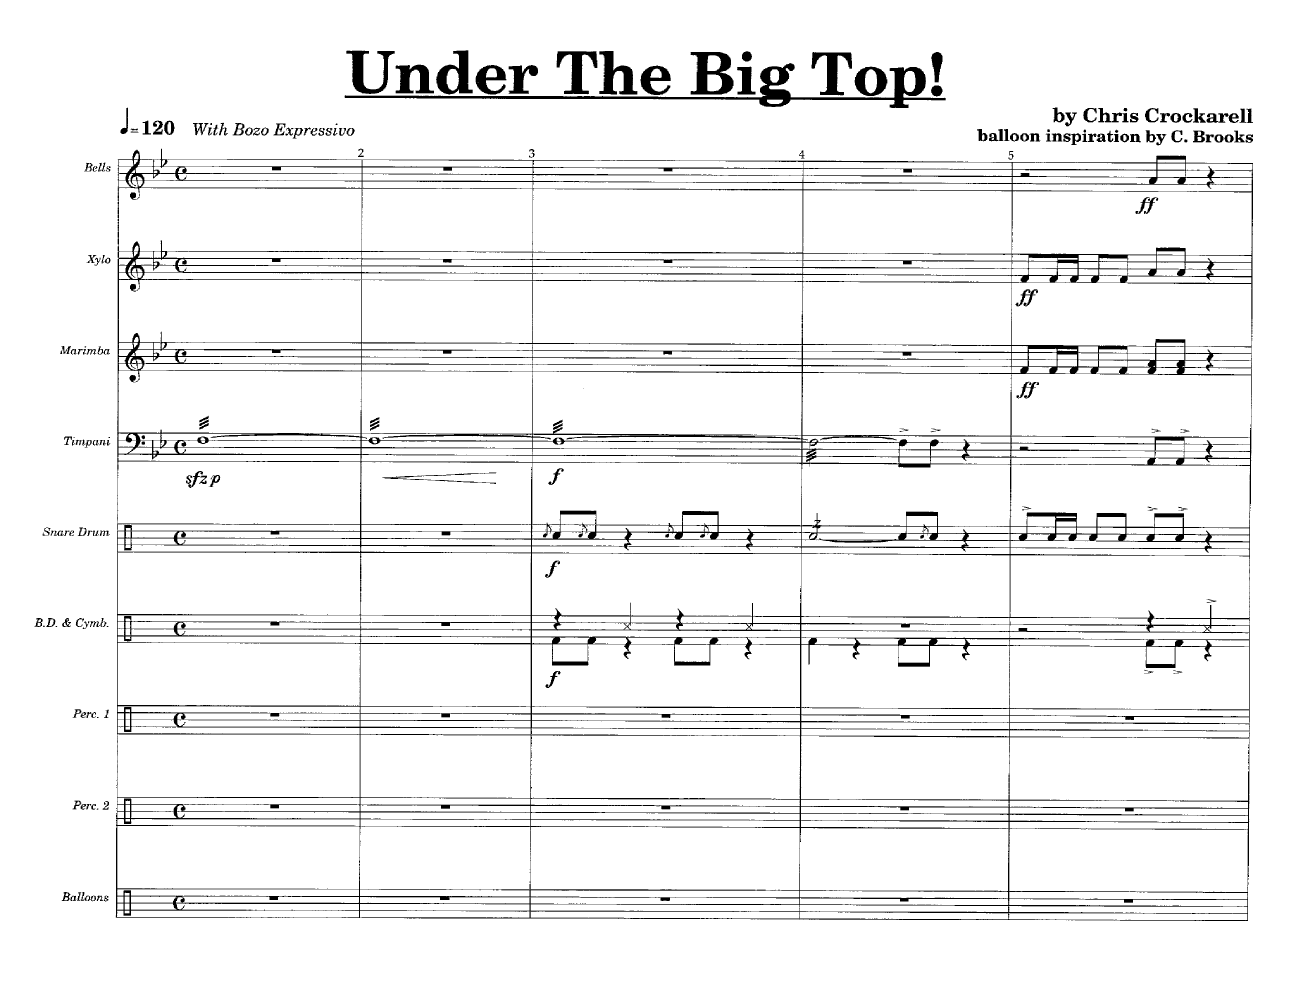 Under the Big Top! by Chris Crockarell